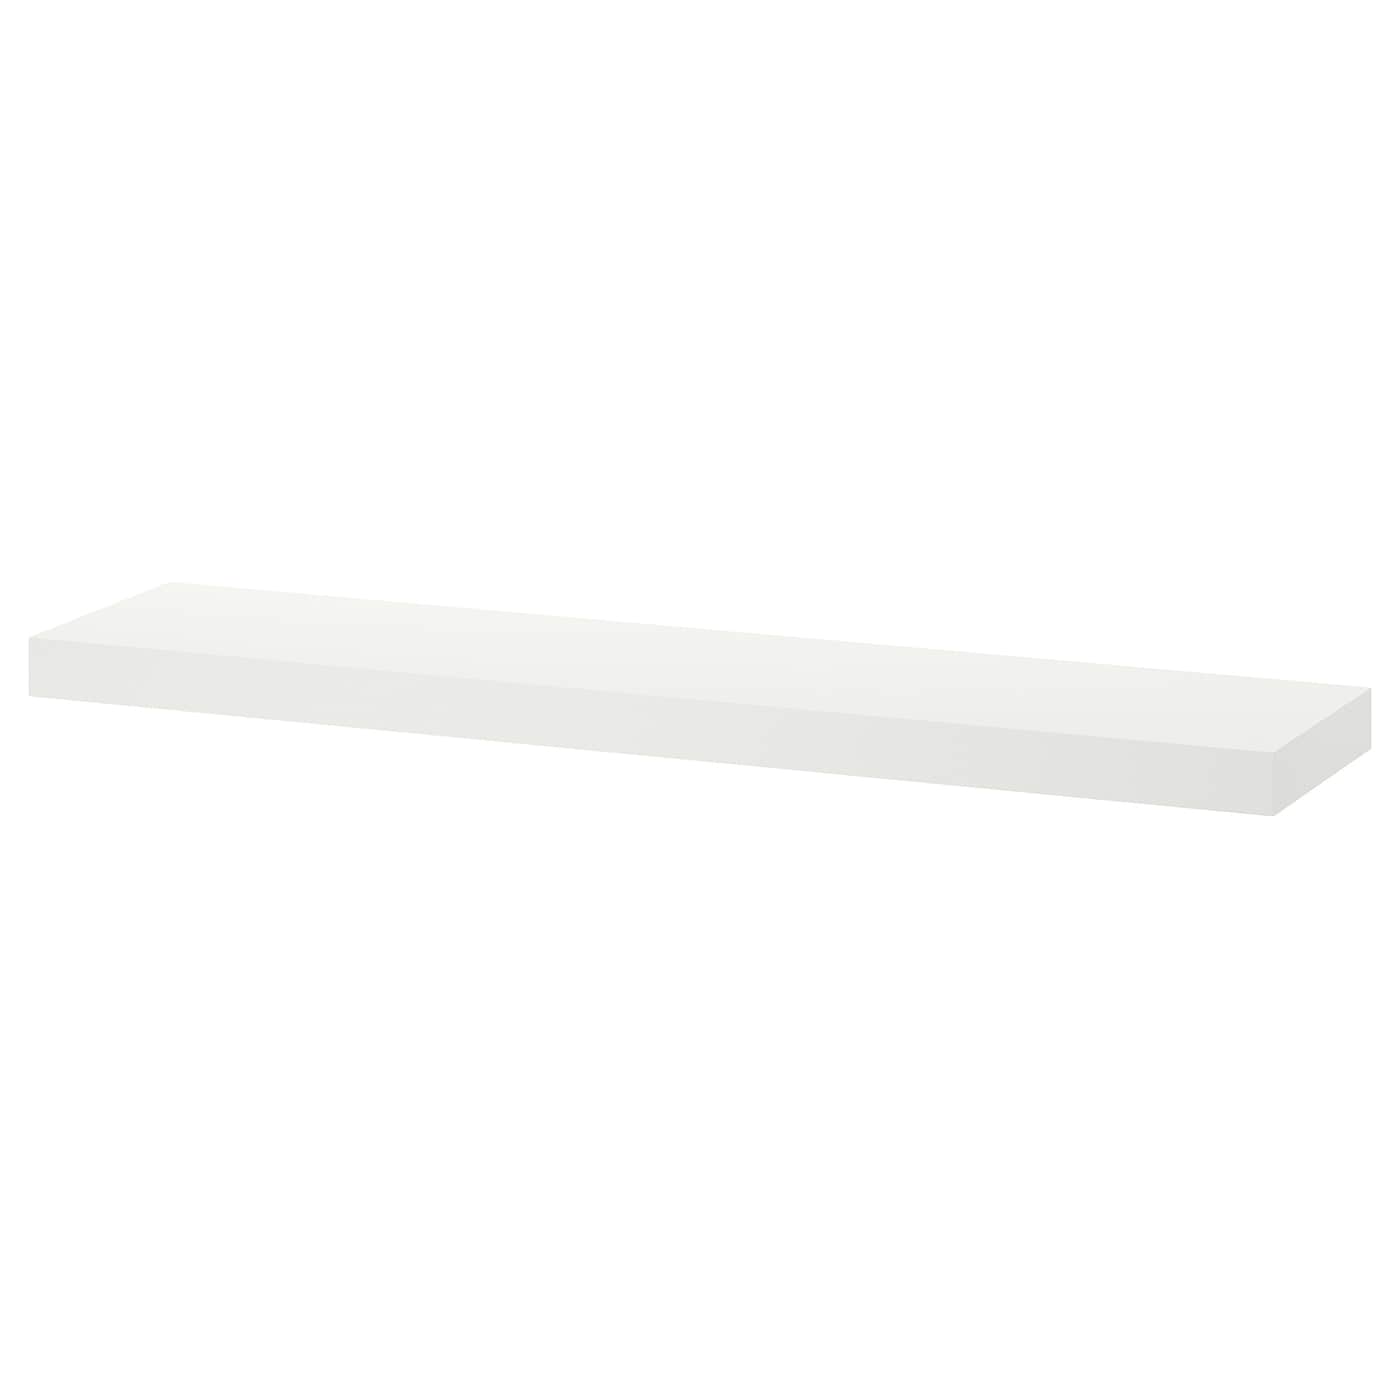 Полка настенная без ножки - IKEA LACK/ ЛАКК ИКЕА, 110x26 см, белый